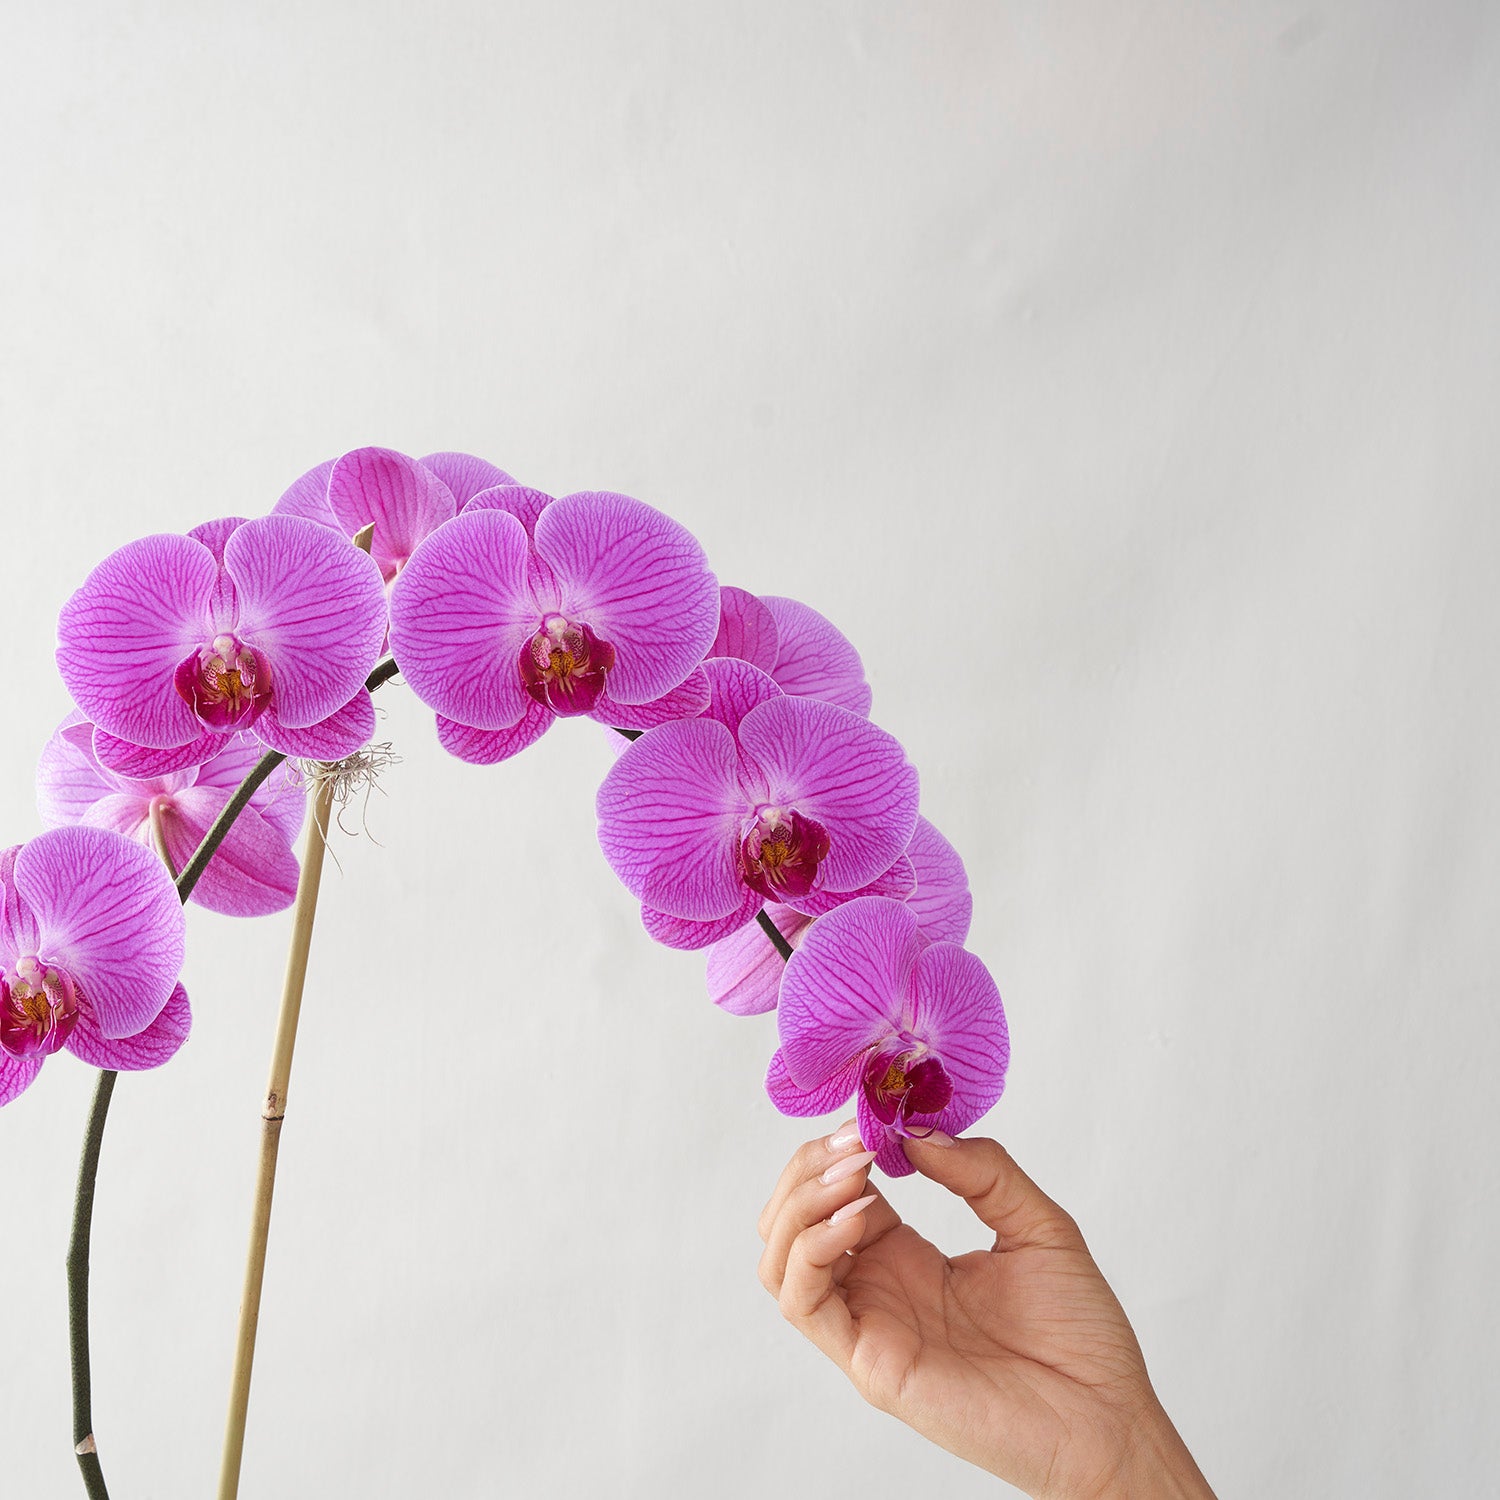 Hand touching fuchsia pink phalaenopsis orchid stem on white background.